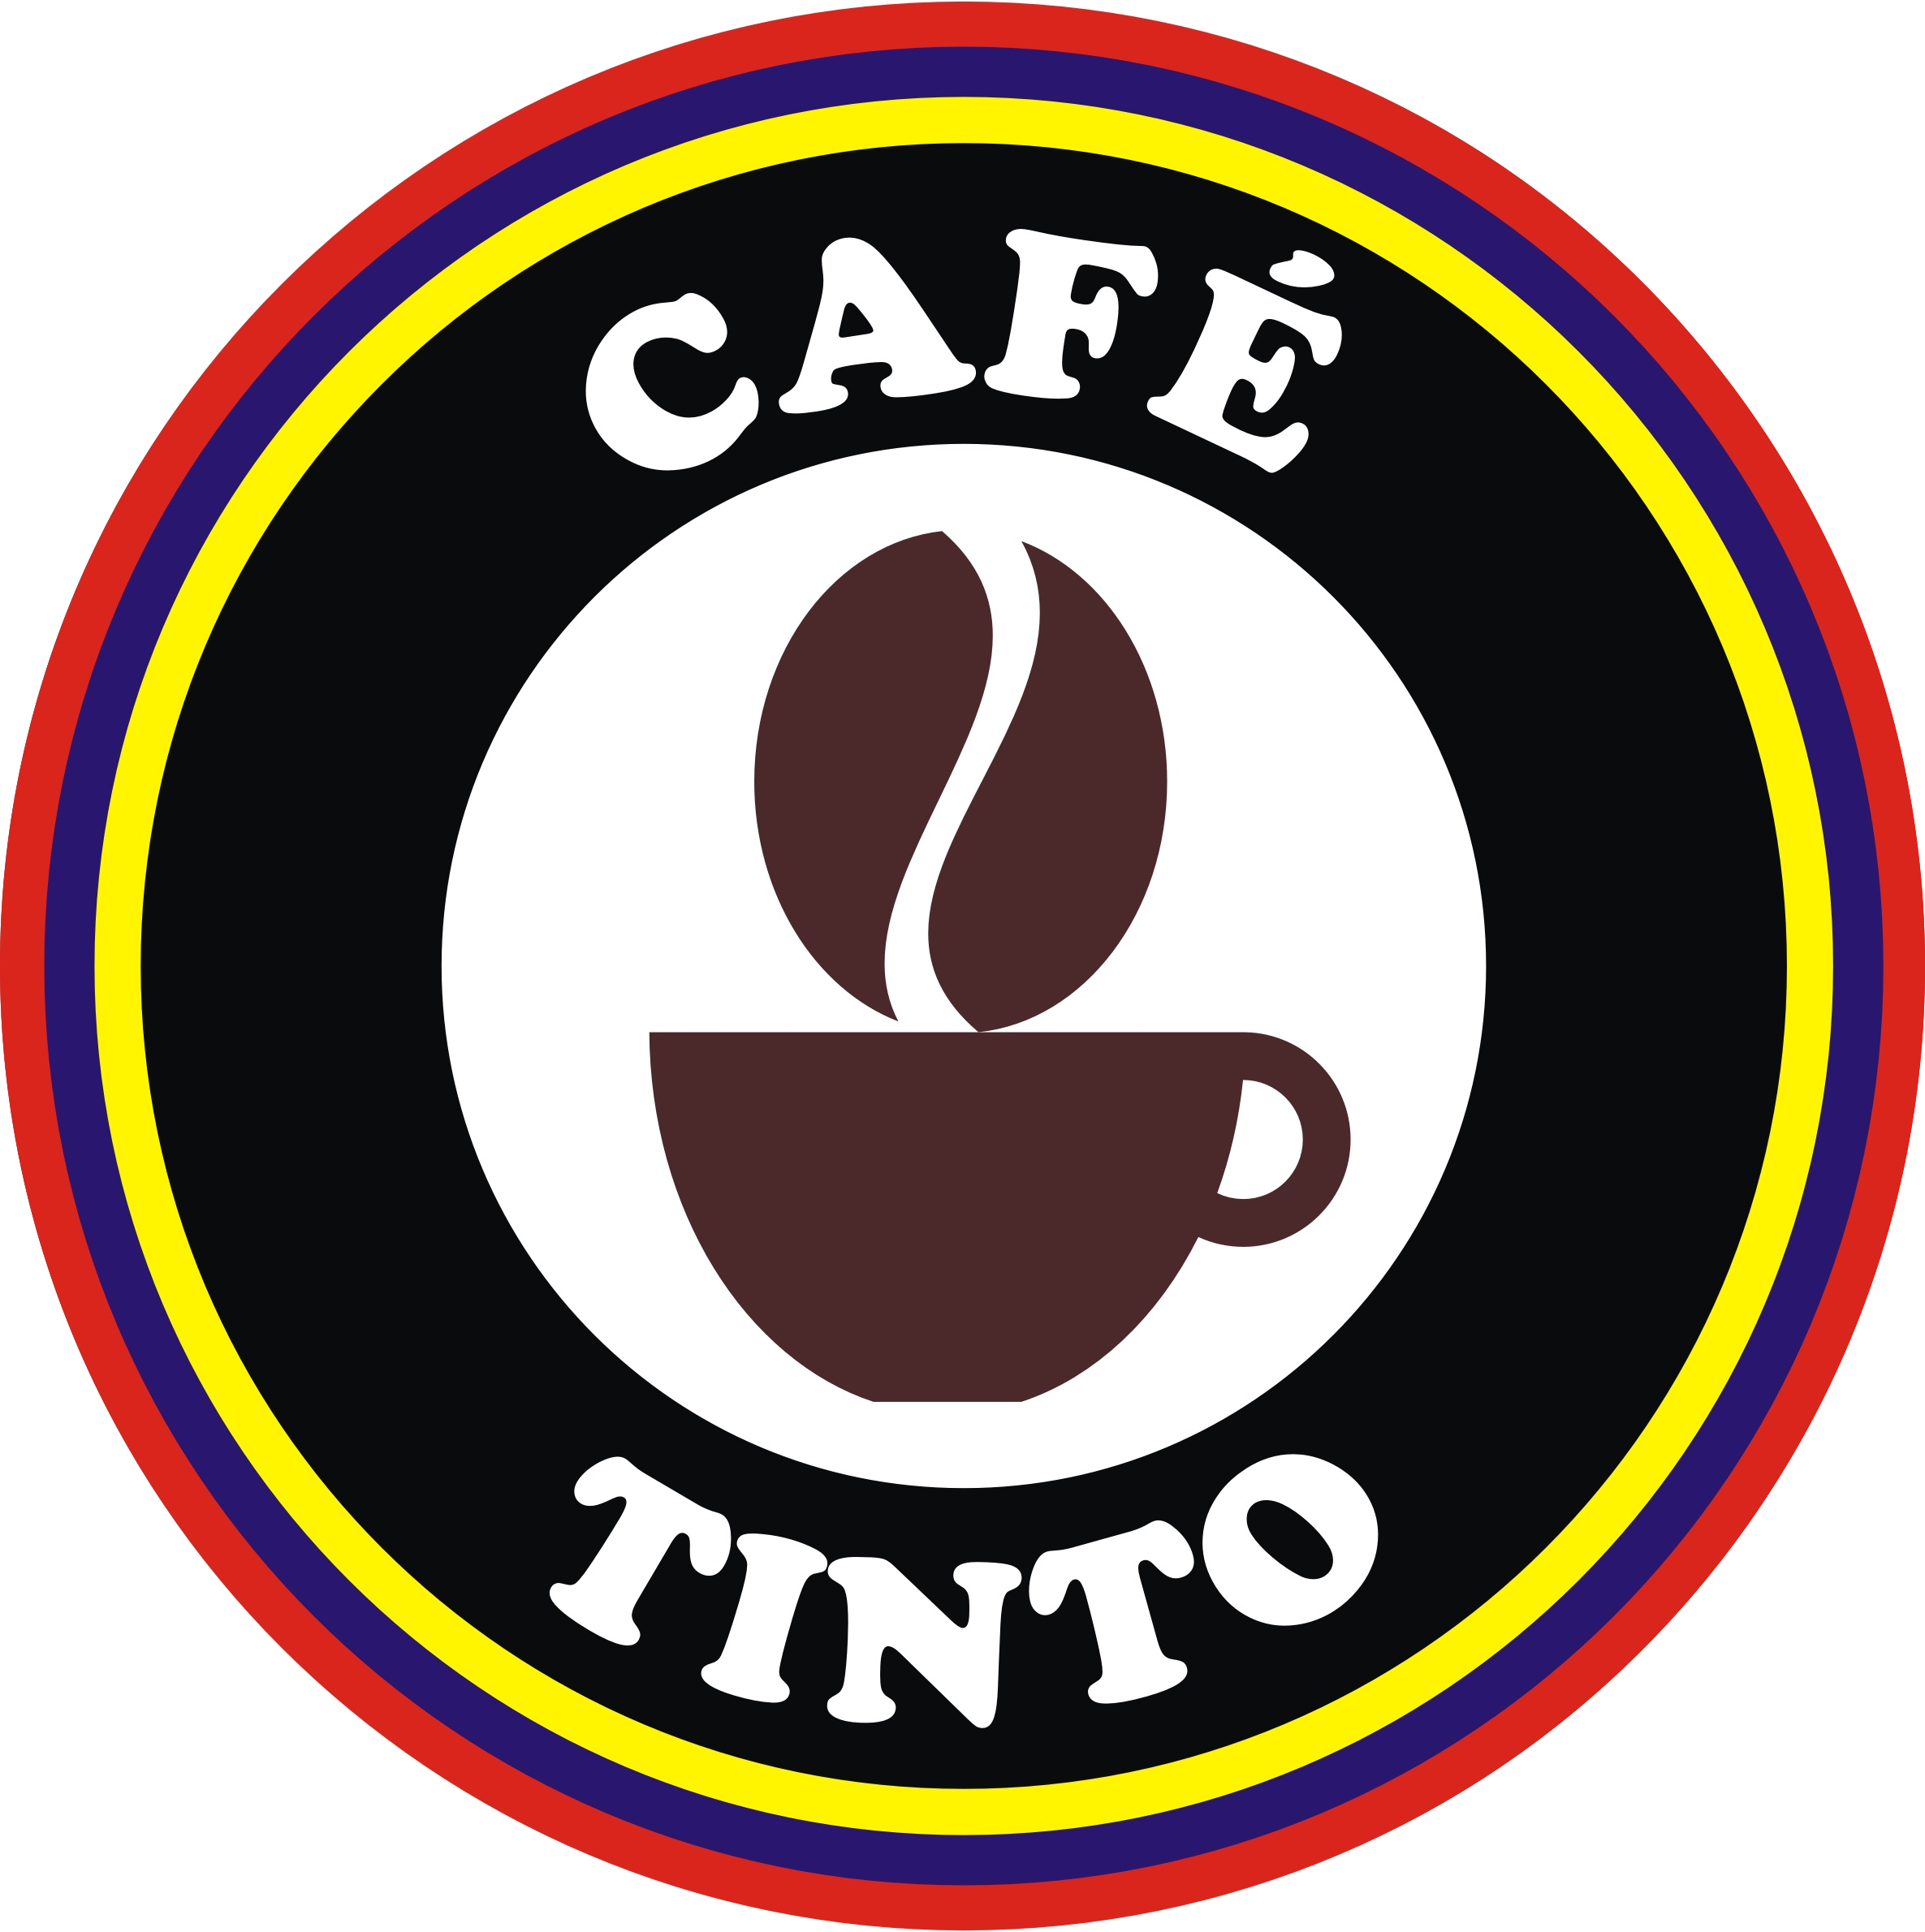 File:Café conilon Timbuí.JPG - Wikipedia